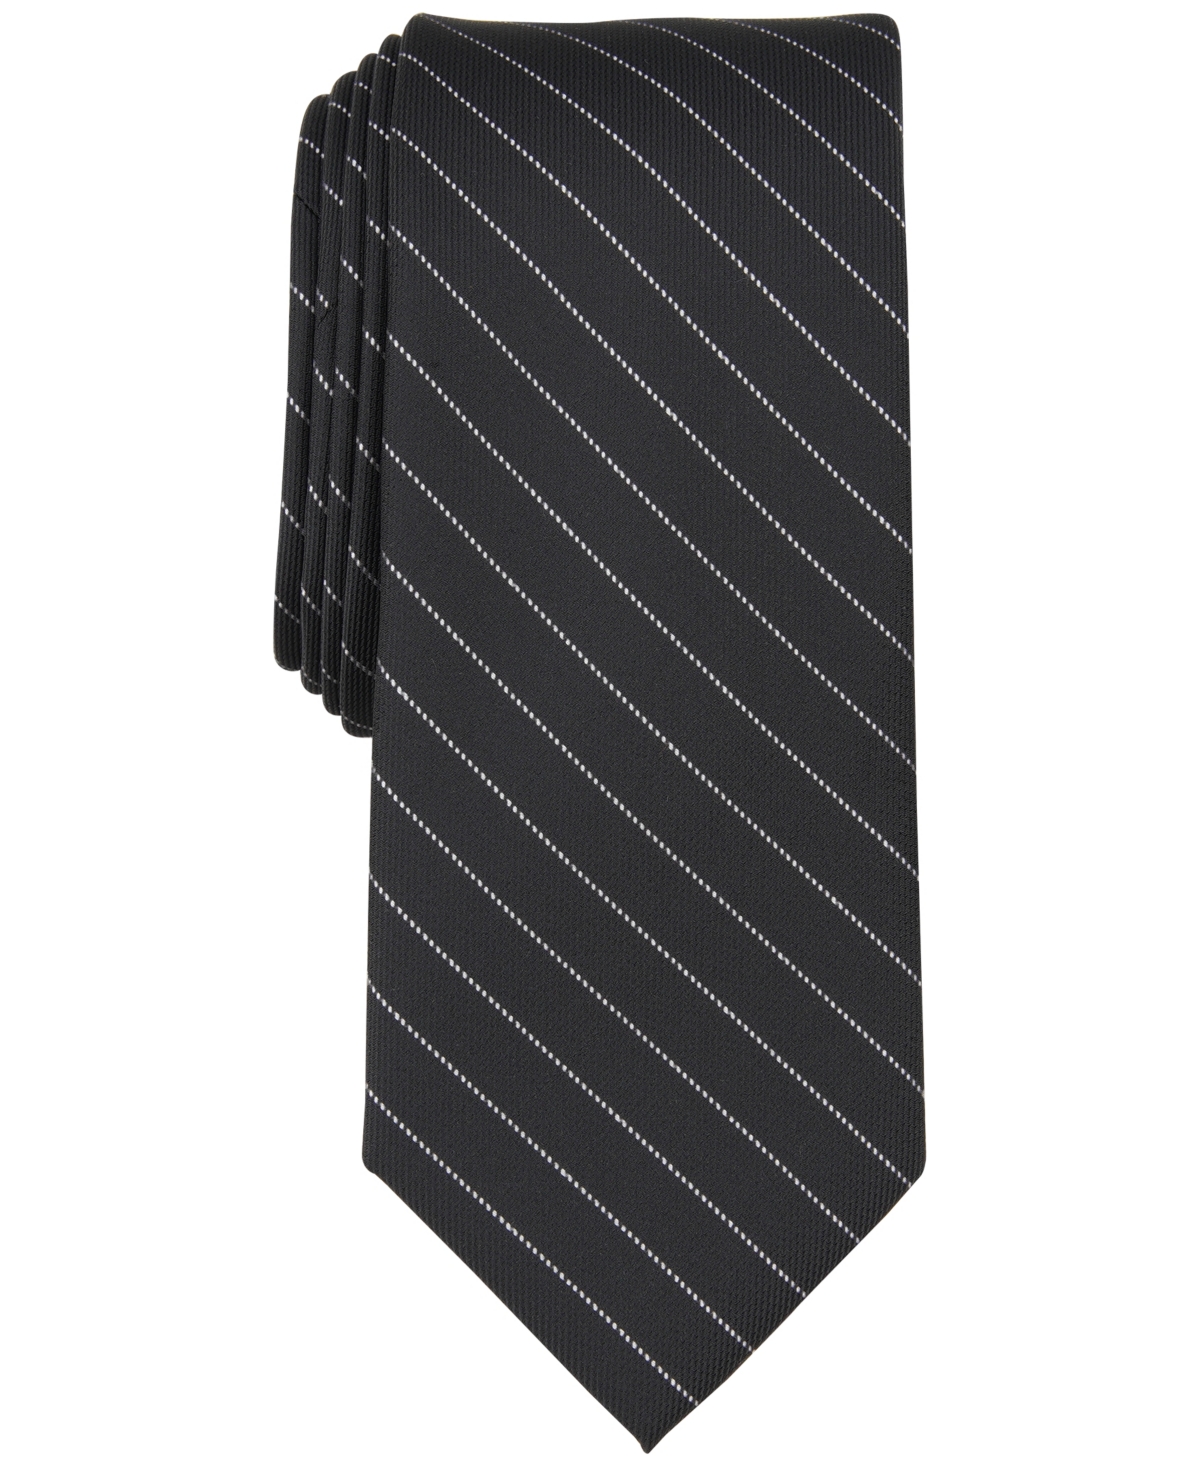 Men's Braly Stripe Tie, Created for Macy's - Navy